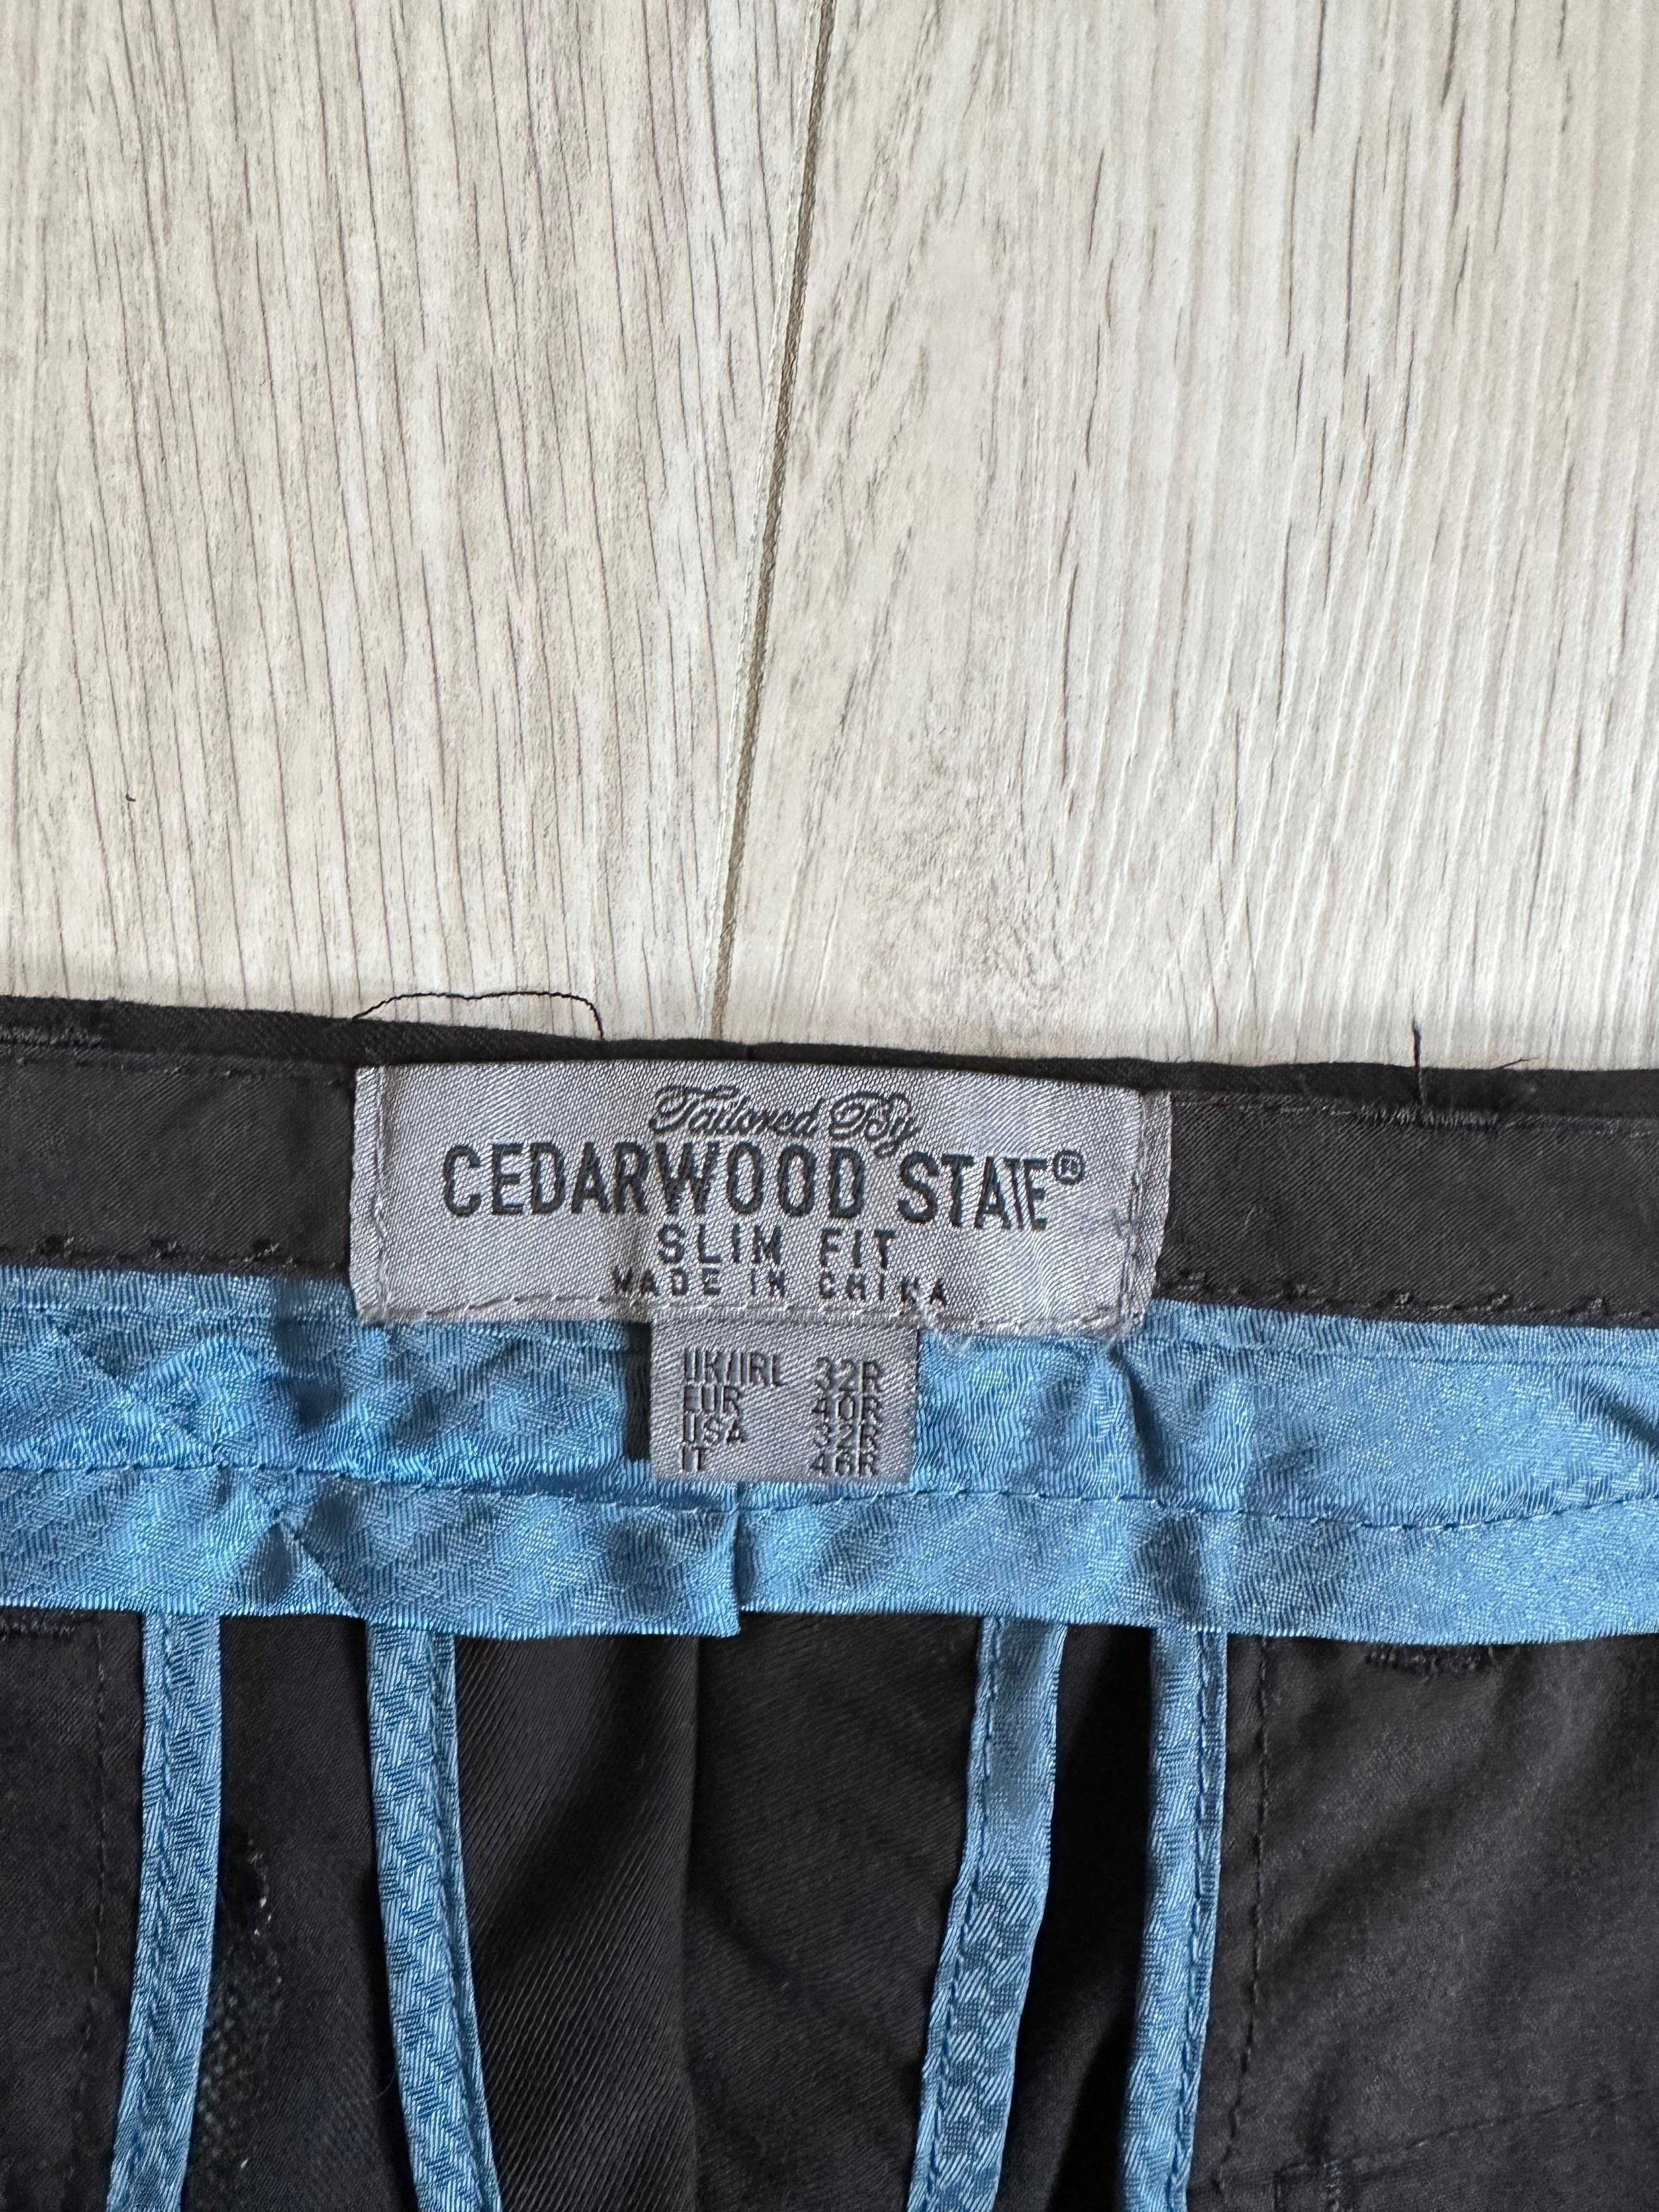 Spodnie Cedar Wood State r. 40